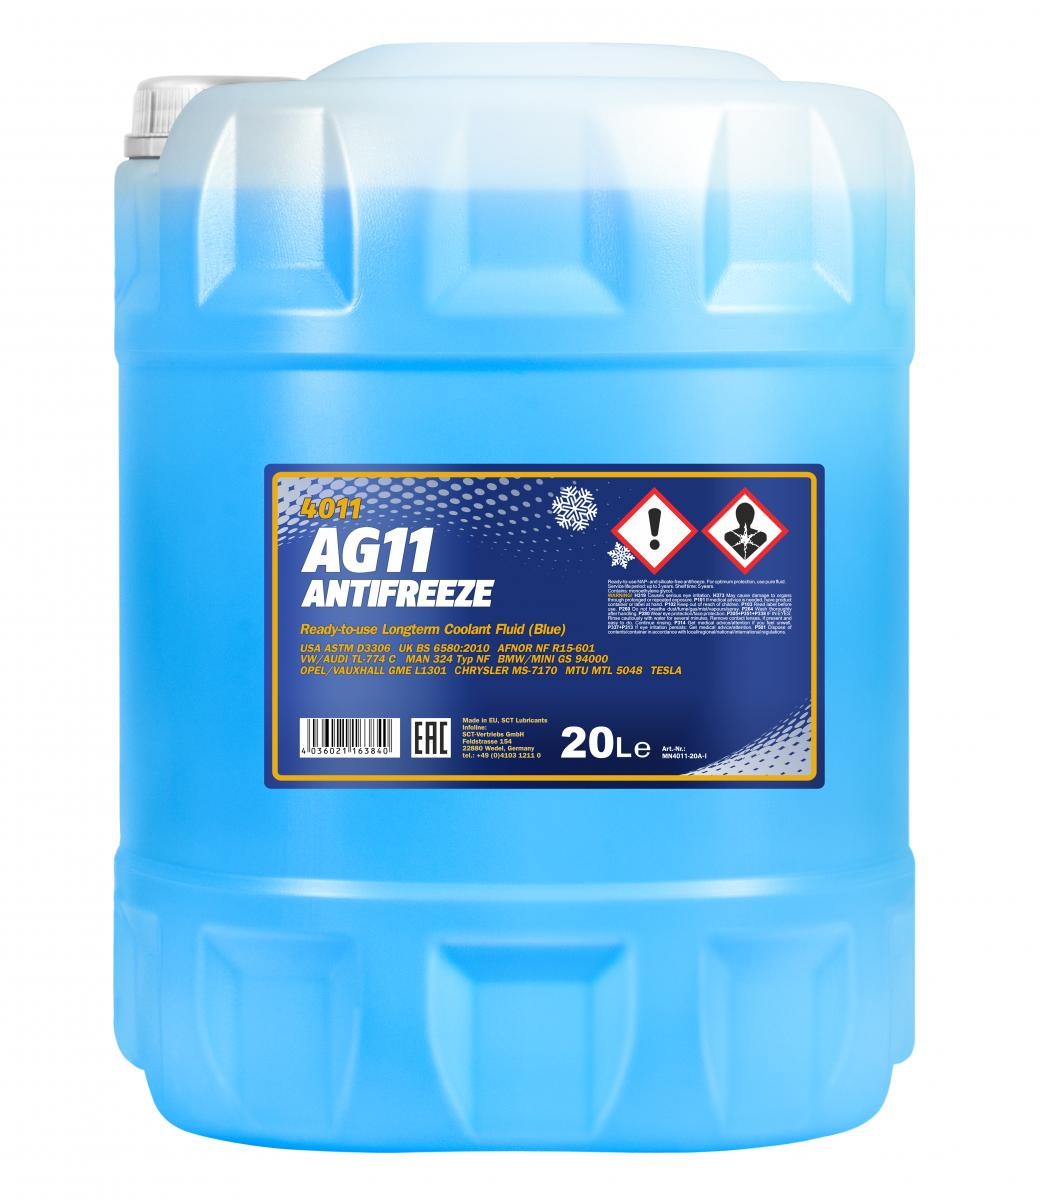 Mannol 4011 Kühlerfrostschutz Antifreeze AG11 Longterm -40 Fertigmischung 20 Liter